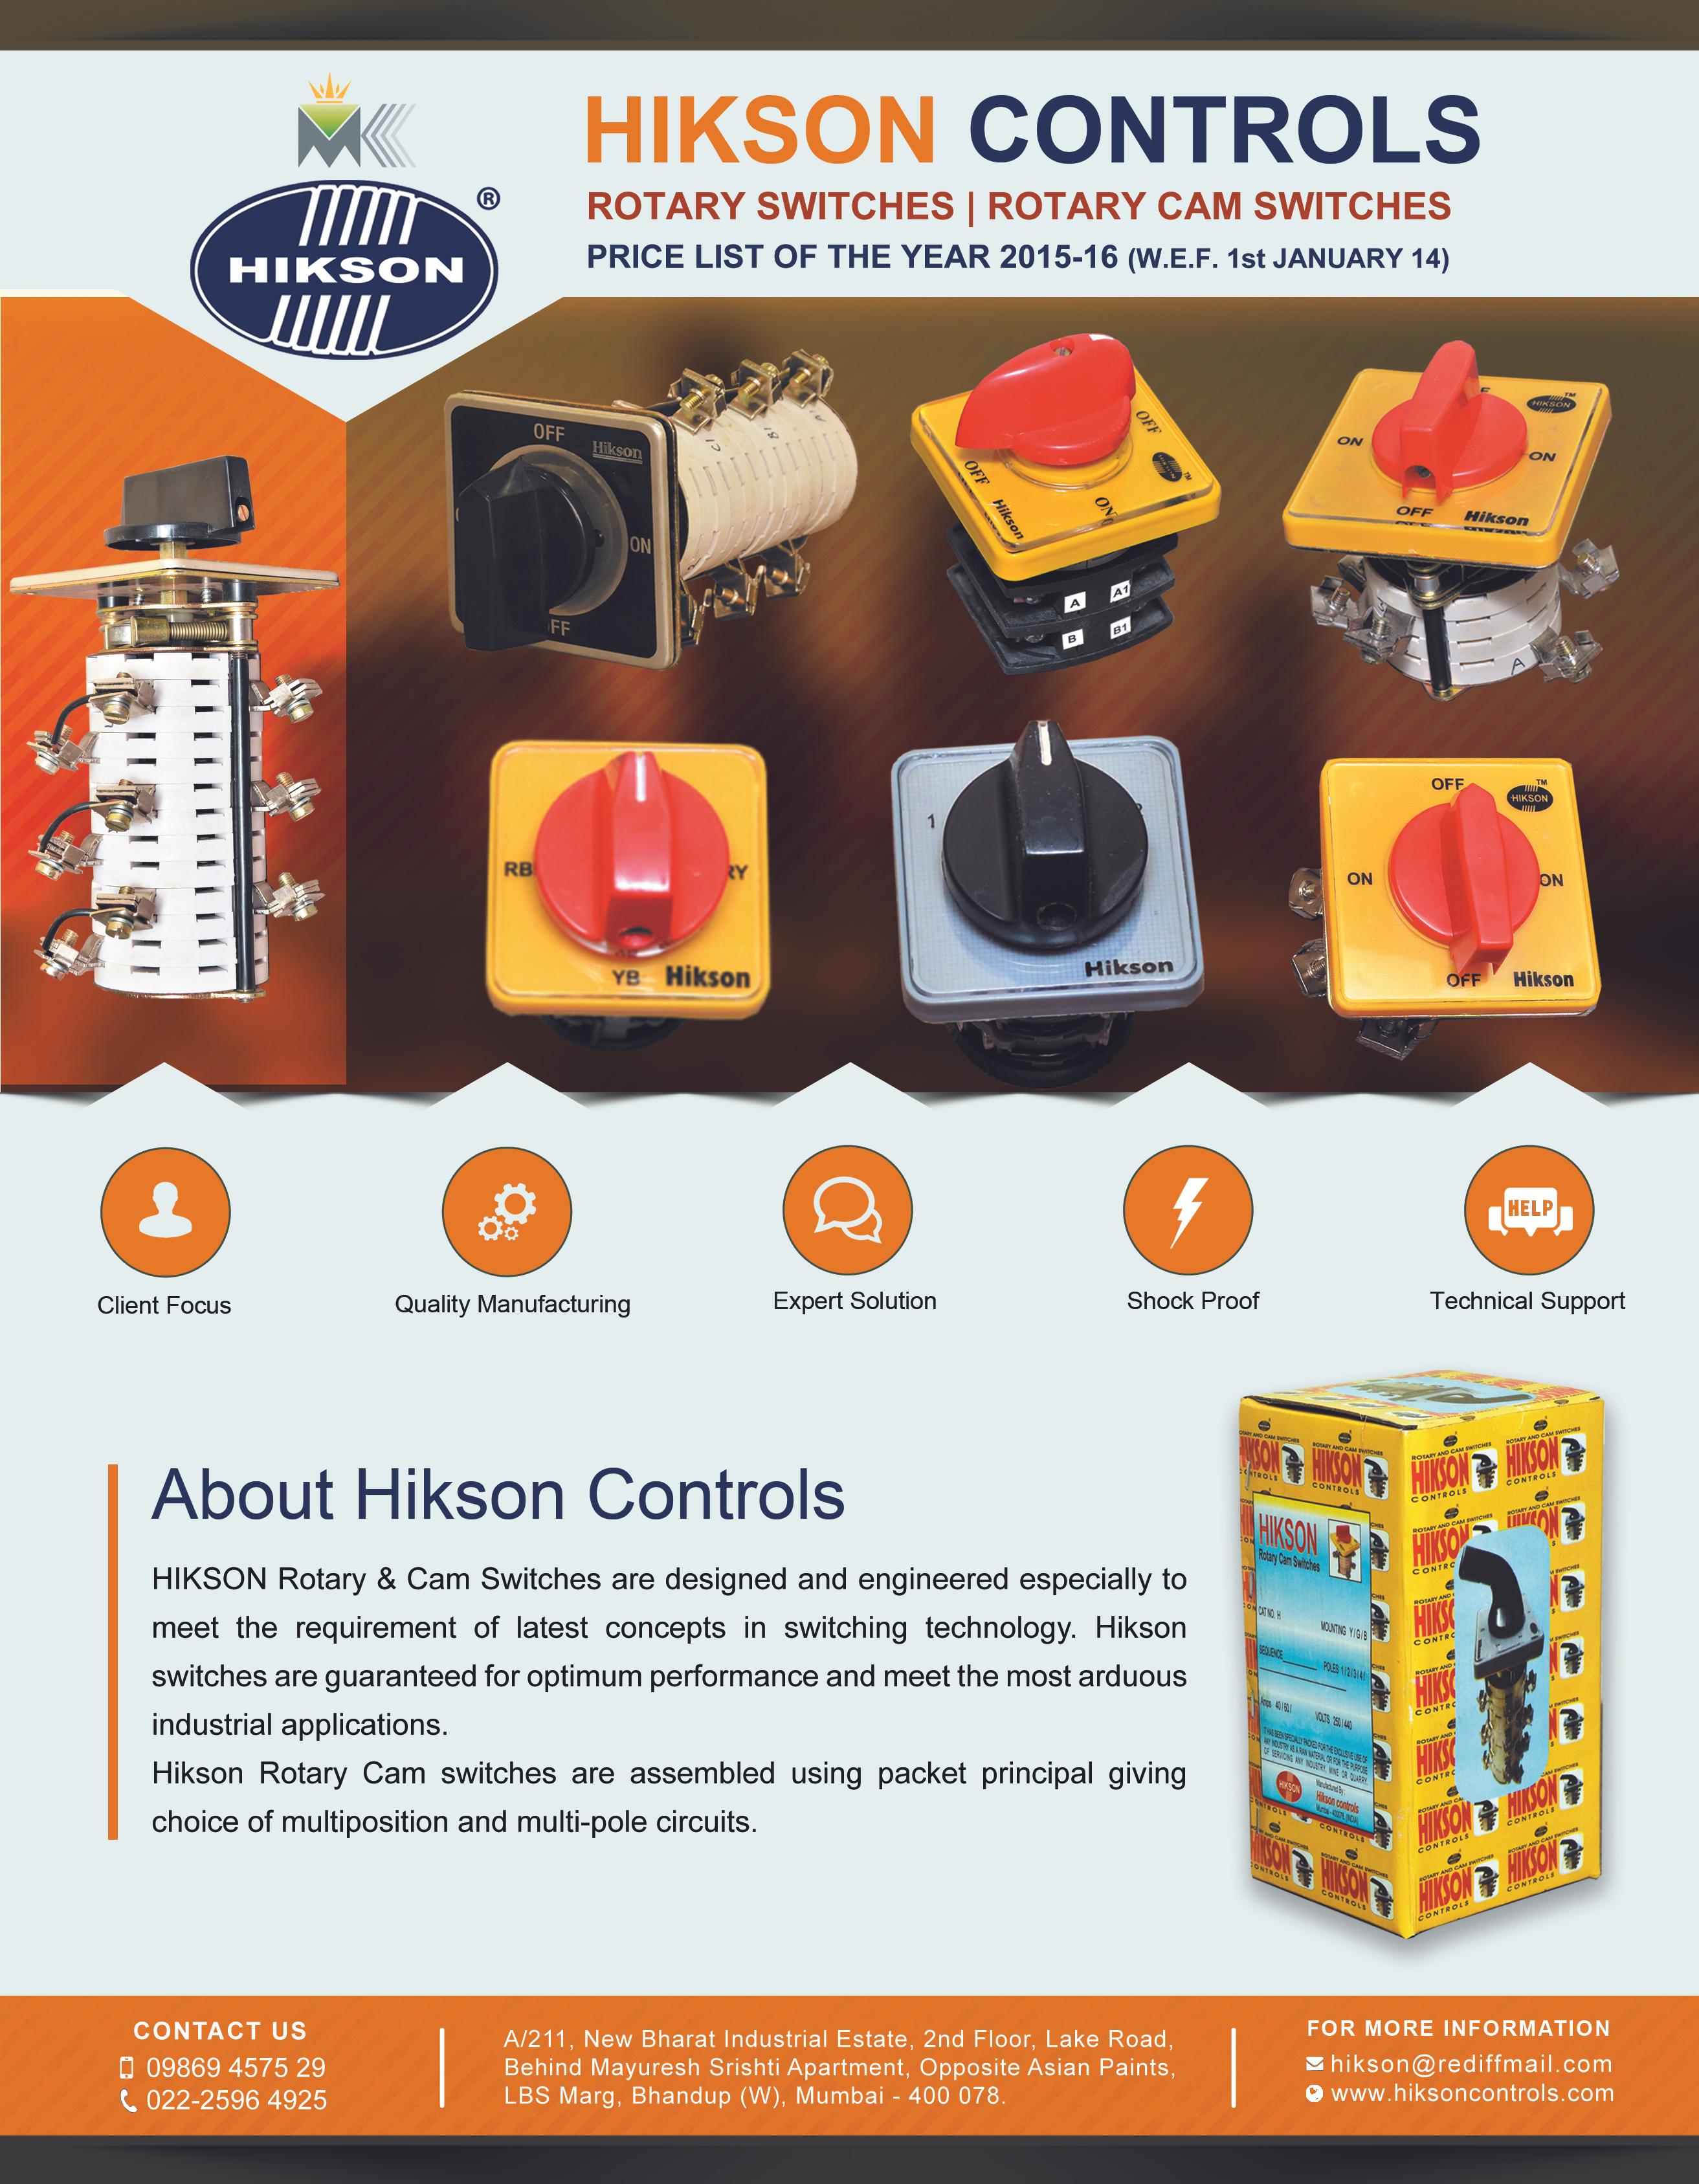 HIKSON CONTROLS